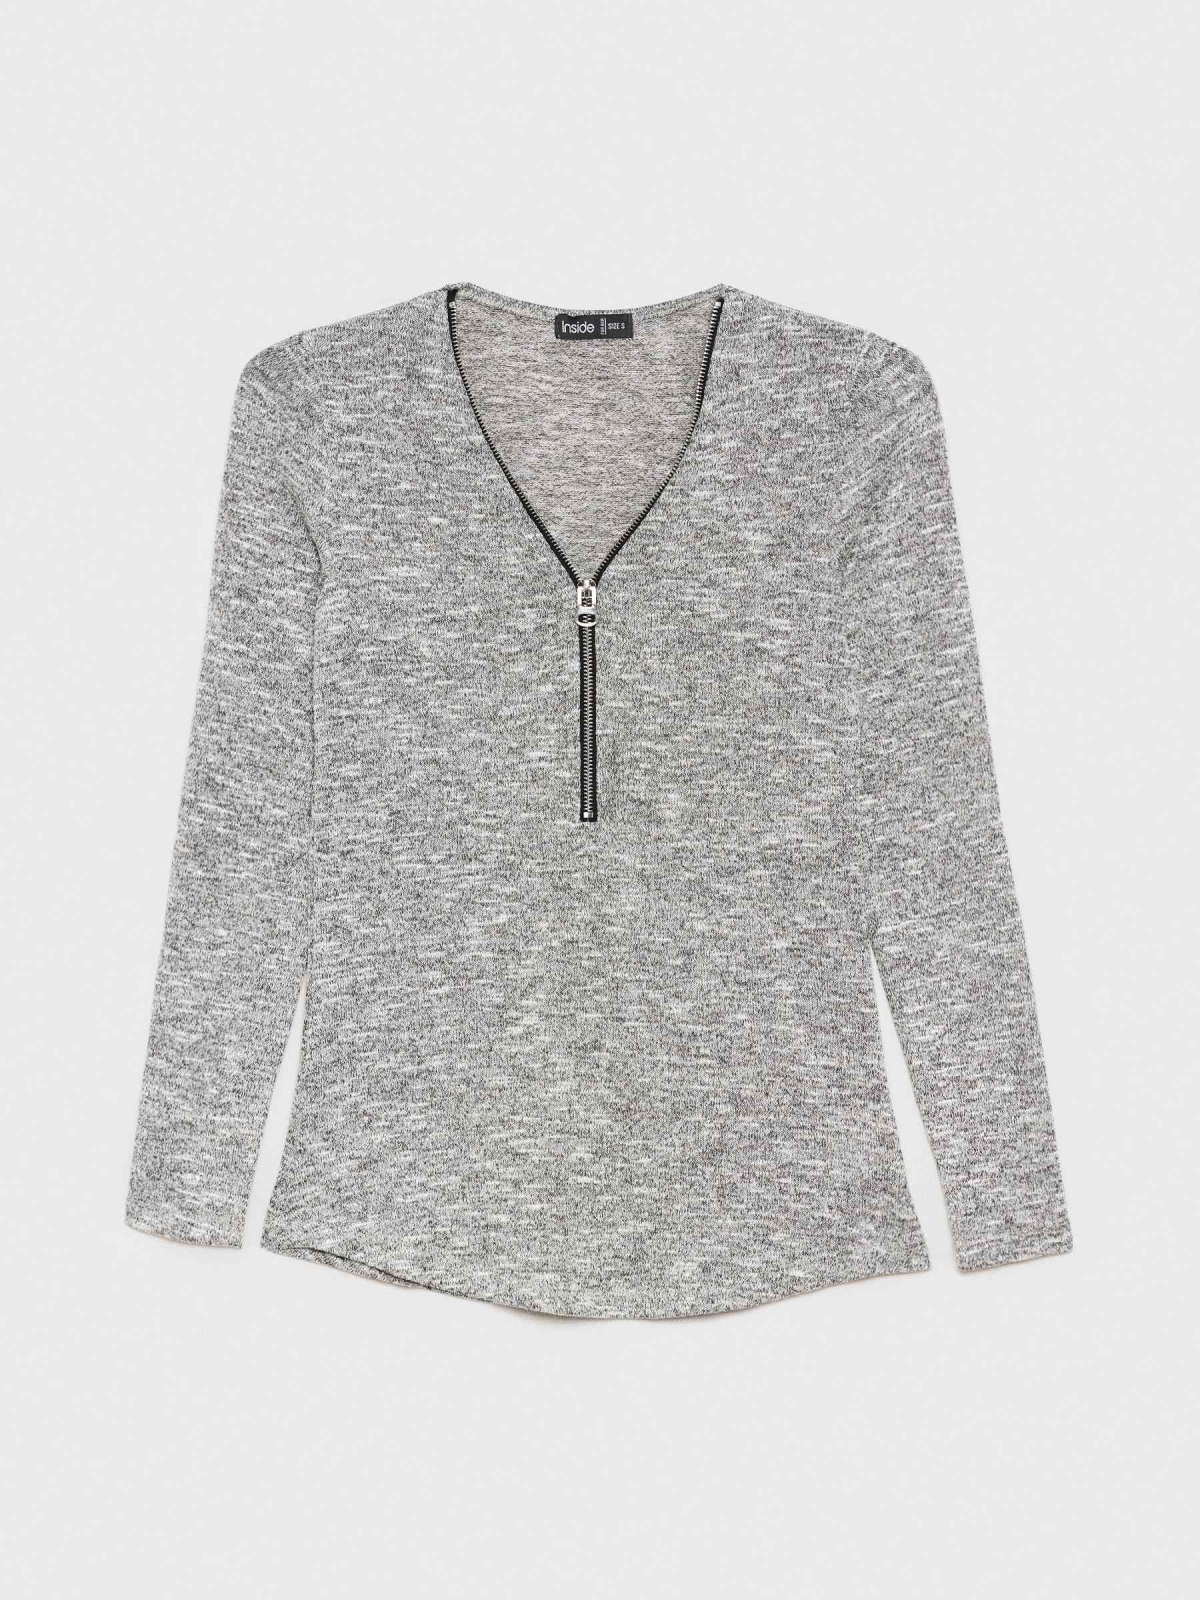  Marbled T-shirt with zipper light grey